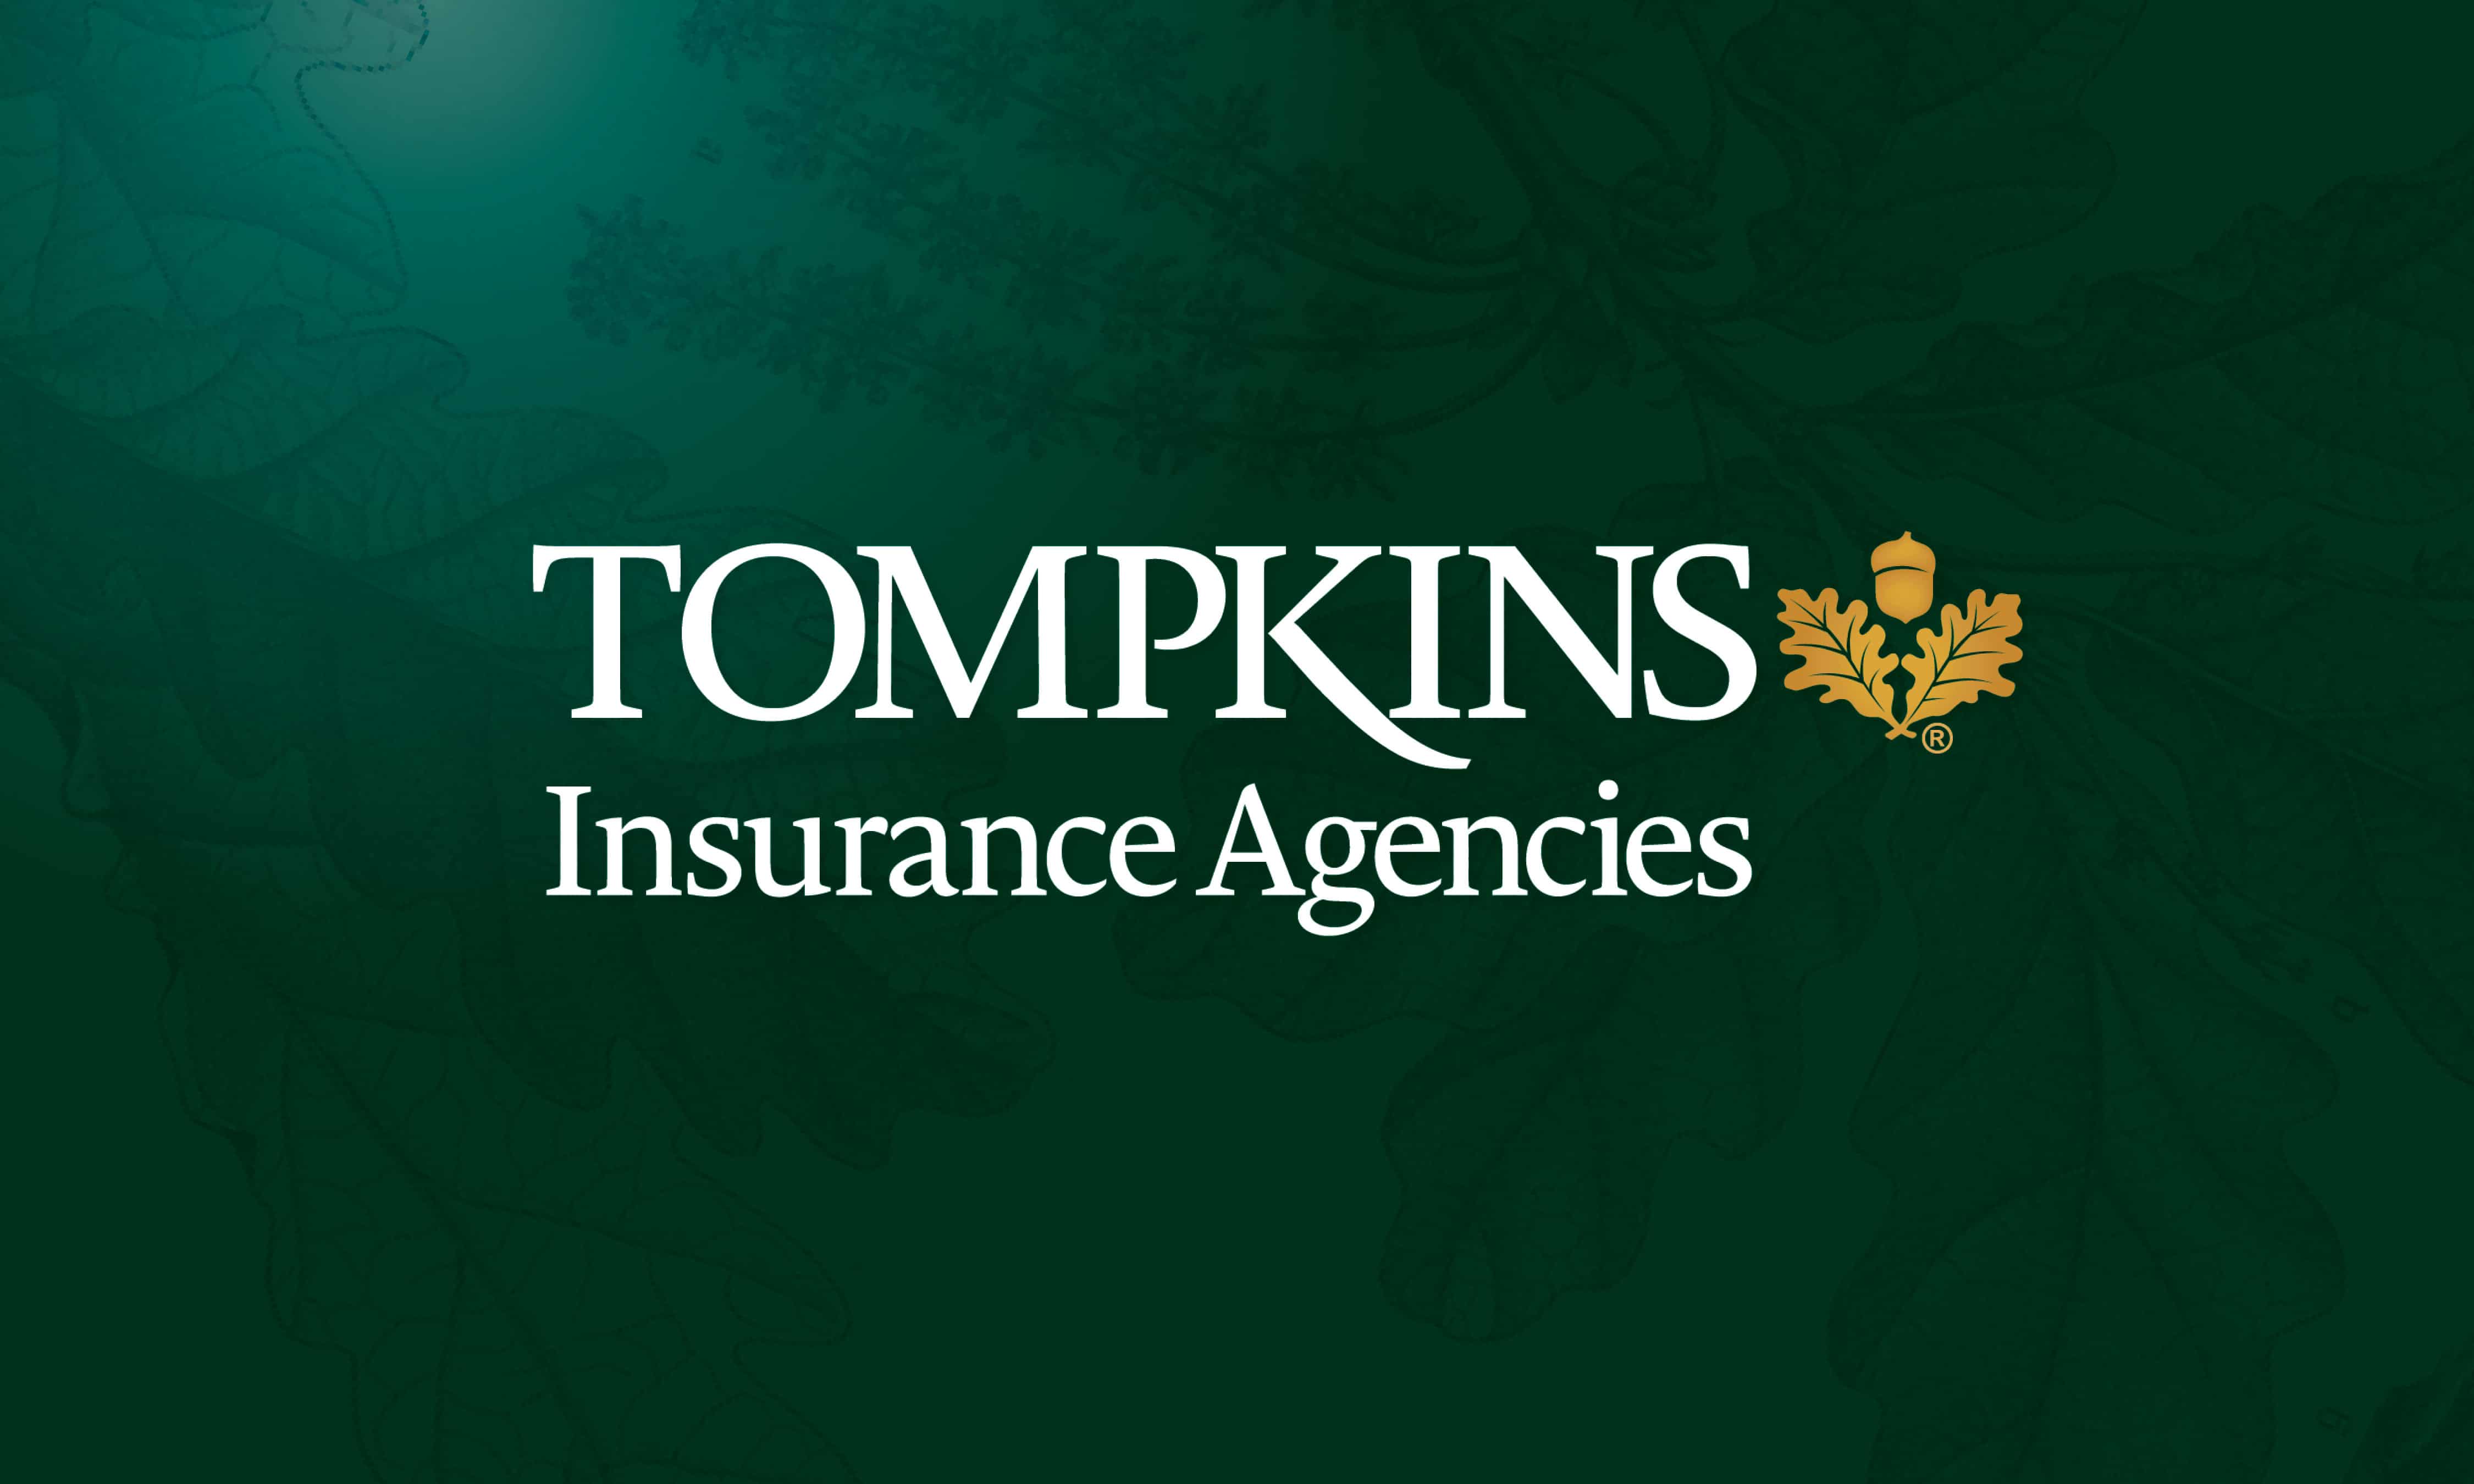 Tompkins Insurance Agencies Welcomes Kierstin Ross as Employee Benefits Account Executive